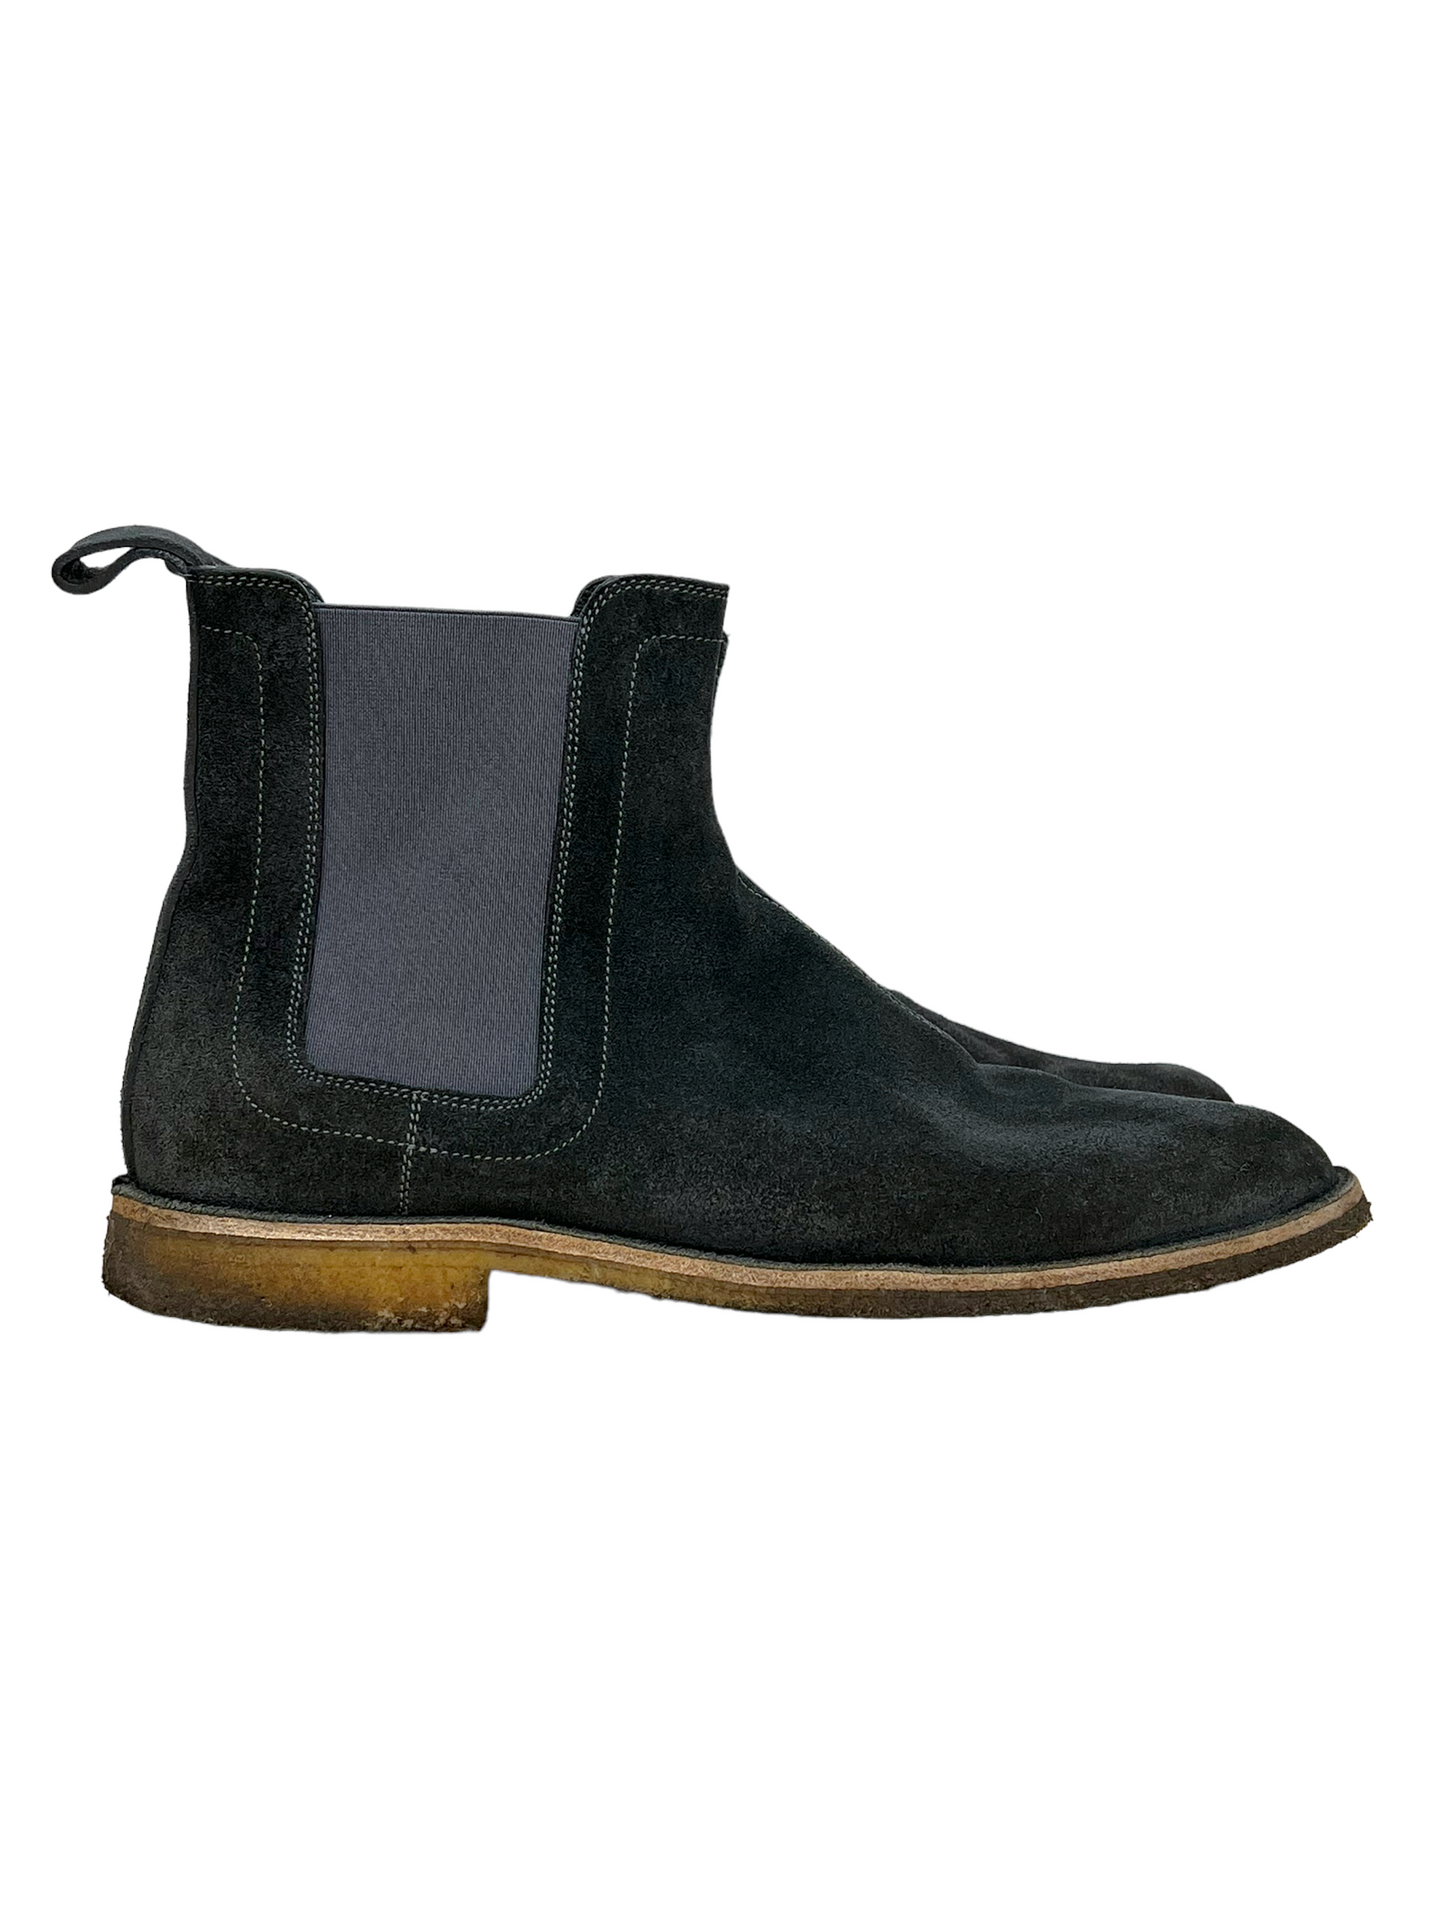 Bottega Veneta Dark Navy Aussie Suede Chelsea Boots - Genuine Design Luxury Consignment for Men. New & Pre-Owned Clothing, Shoes, & Accessories. Calgary, Canada